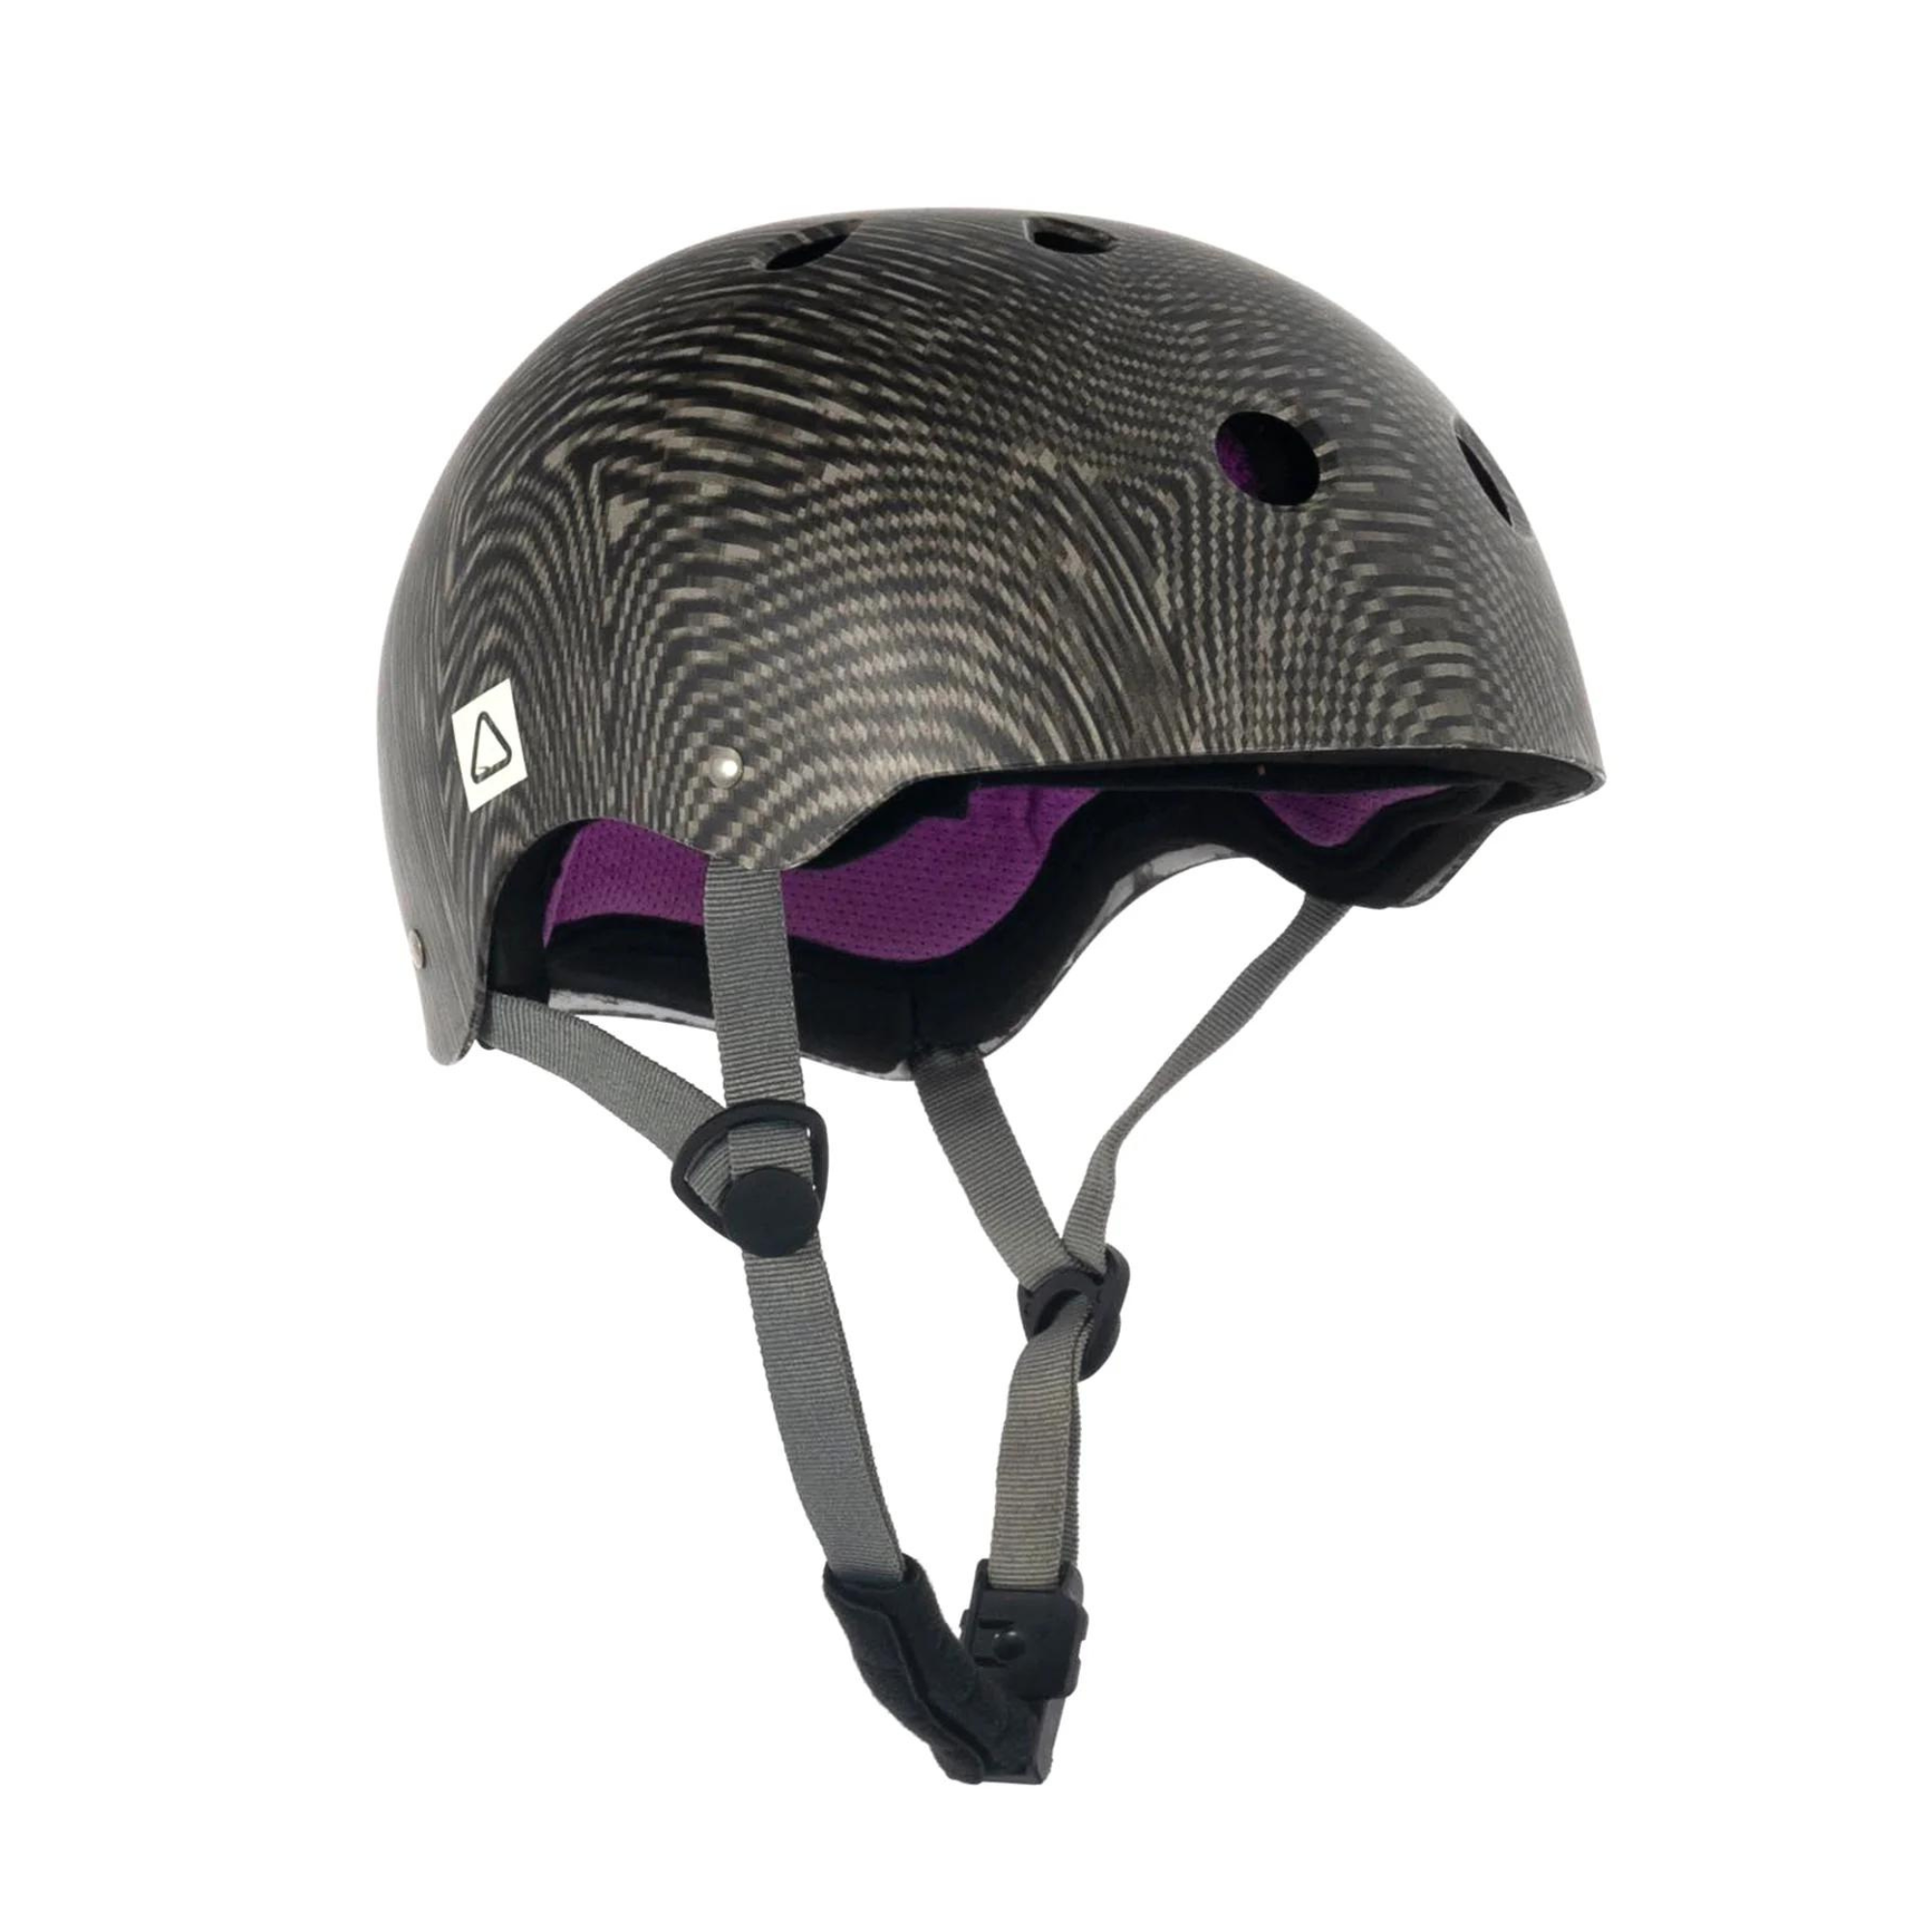 Follow Pro Graphic Helmet - Pedro Black